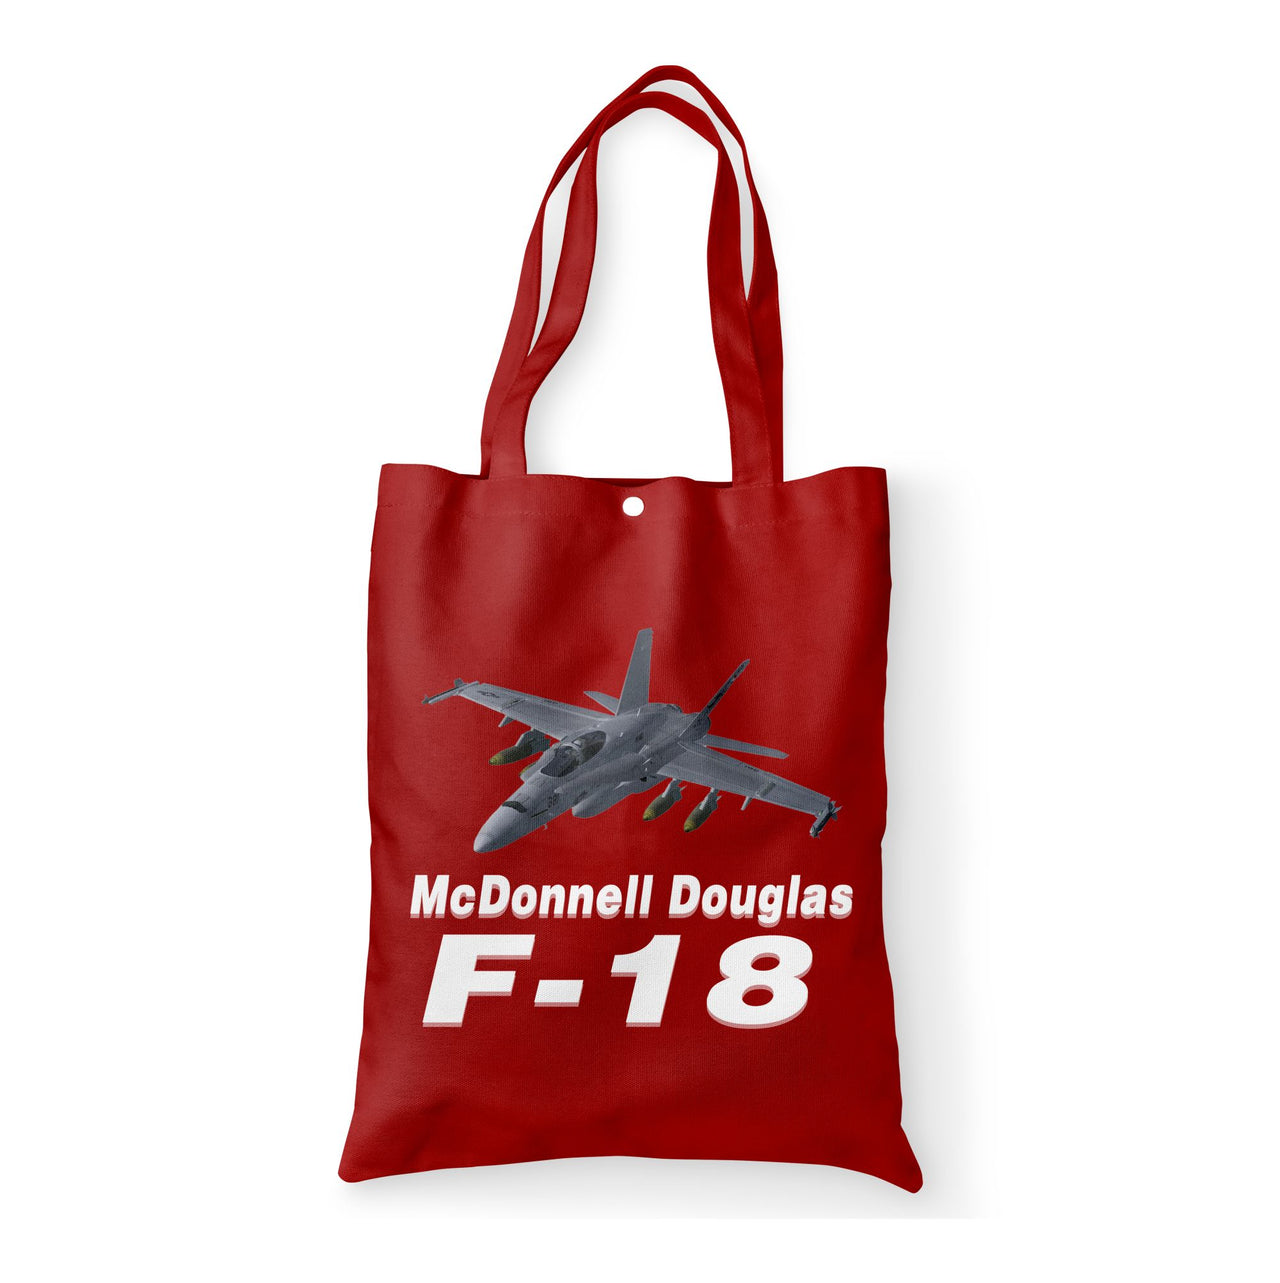 The McDonnell Douglas F18 Designed Tote Bags